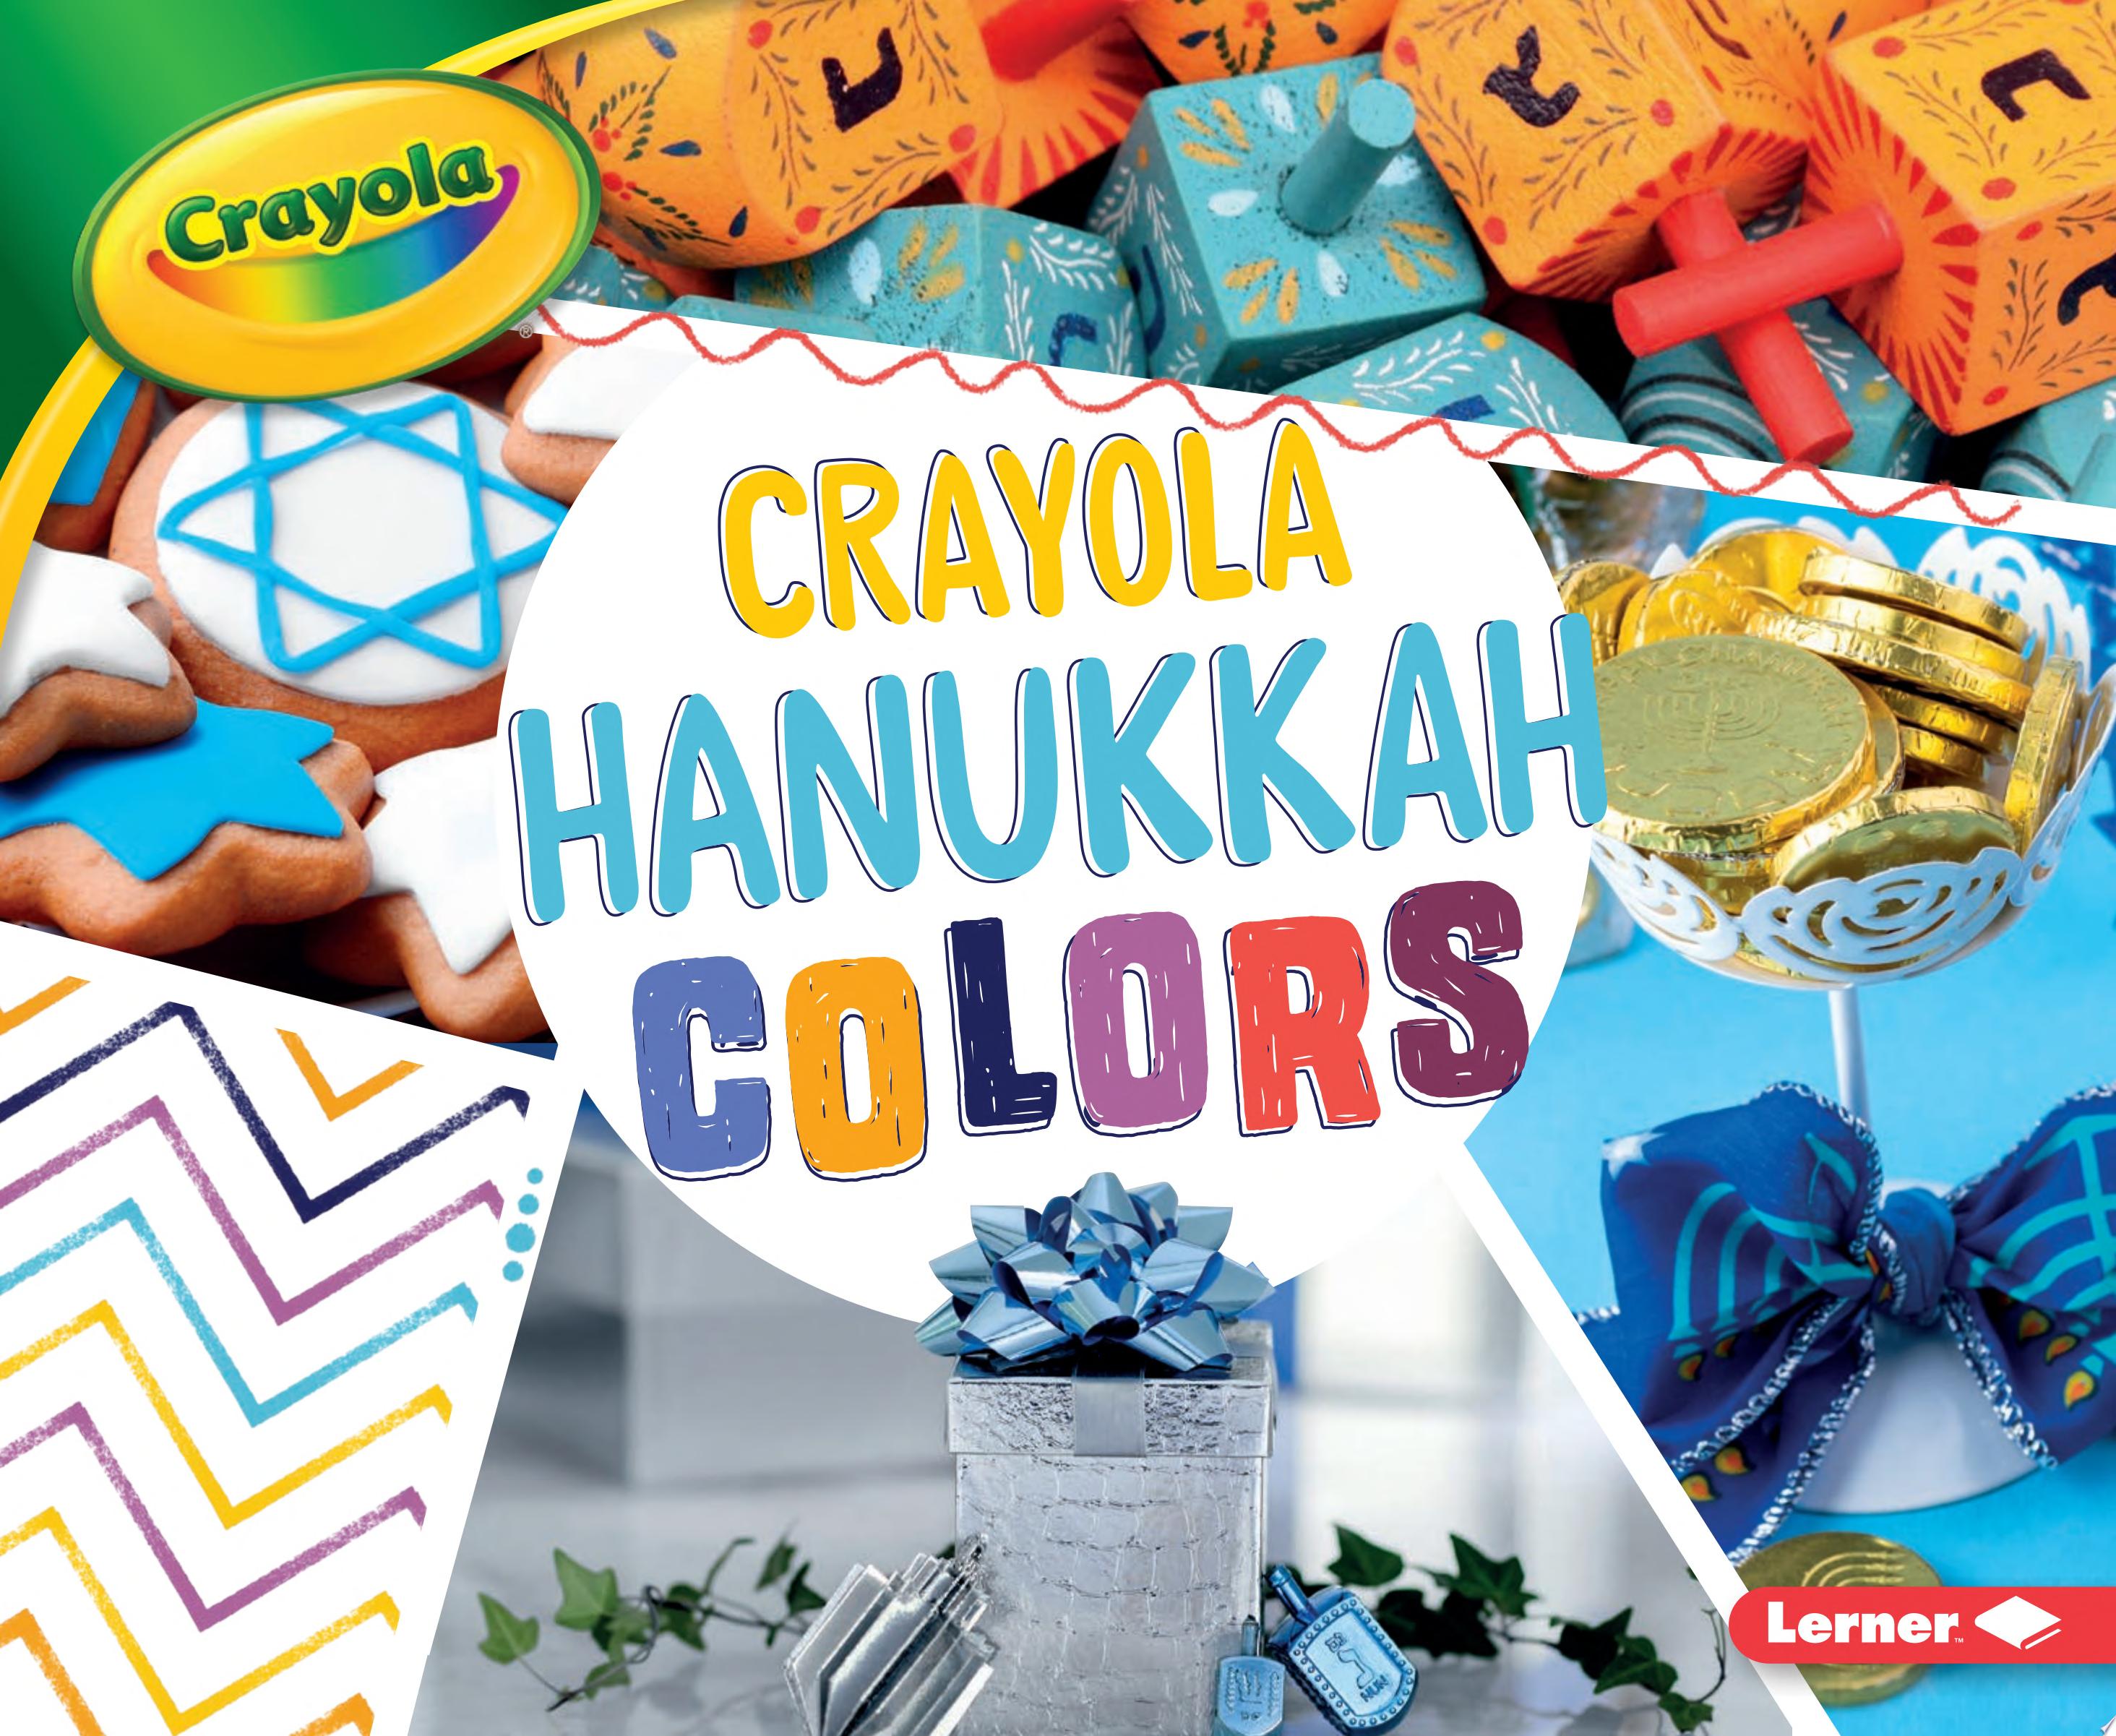 Image for "Crayola ® Hanukkah Colors"